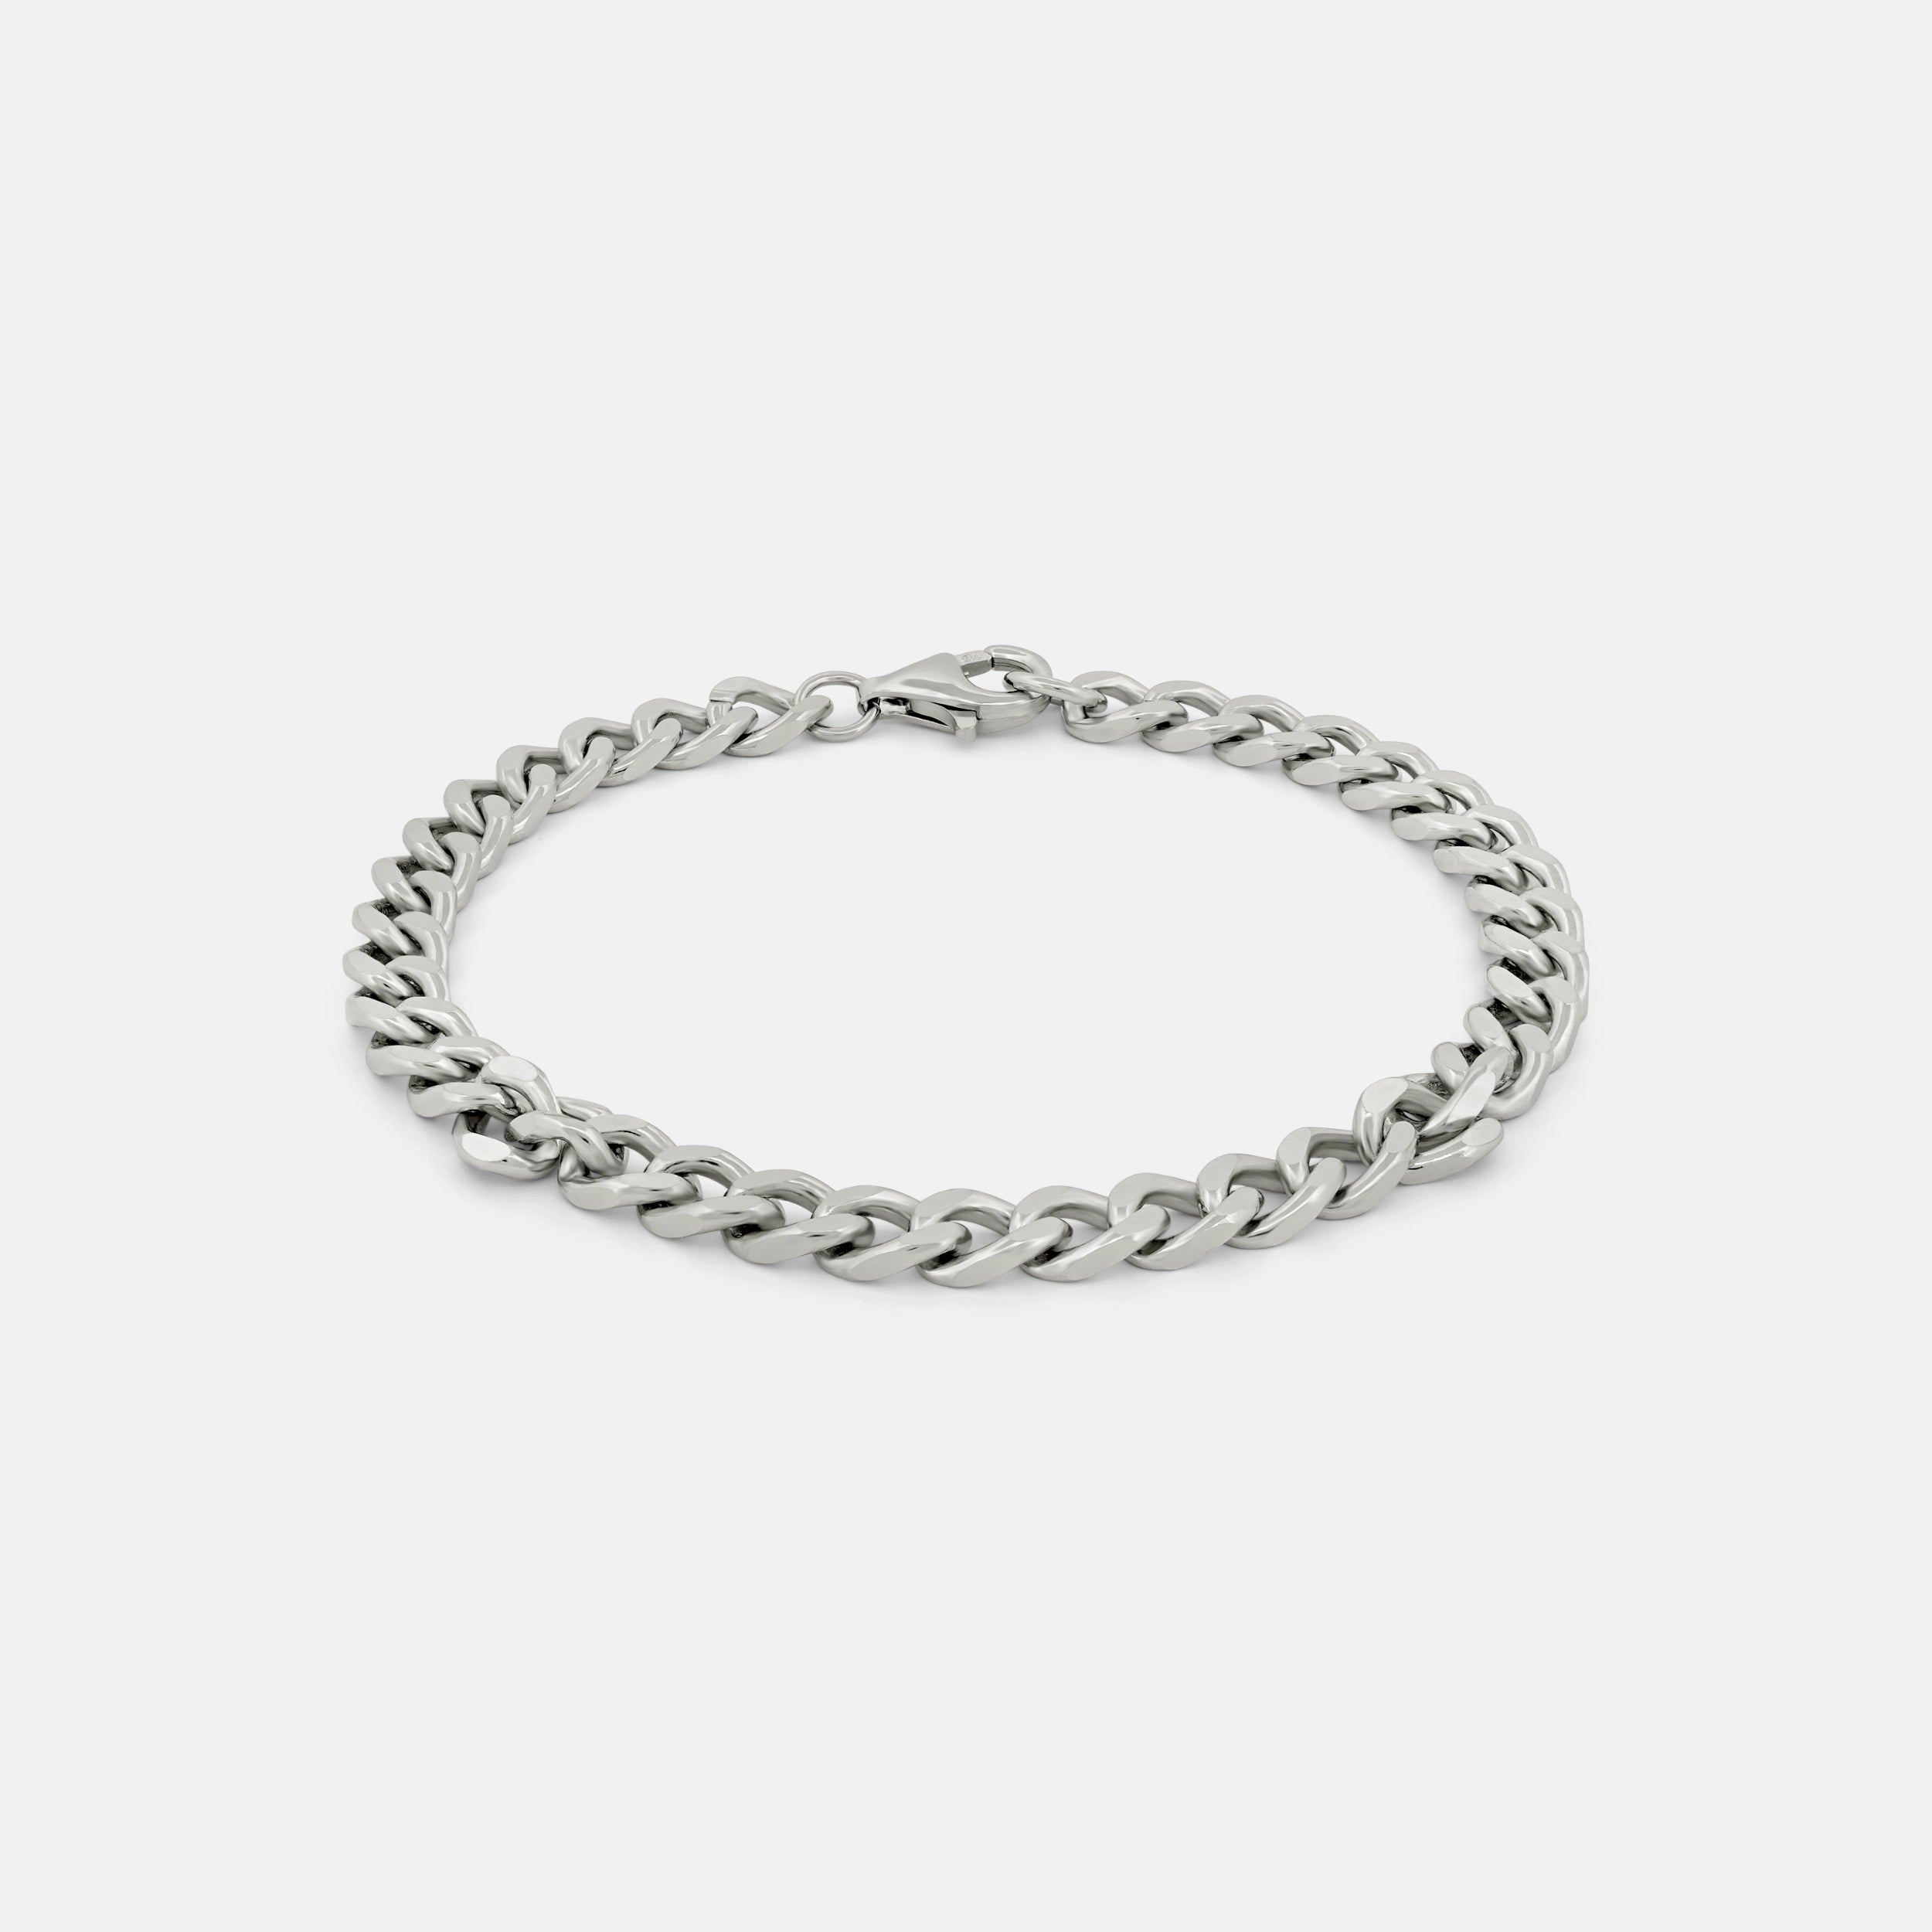 Ark & Bow Jewelry: 925 Silver  Chains, Rings, Bracelets, Pendants